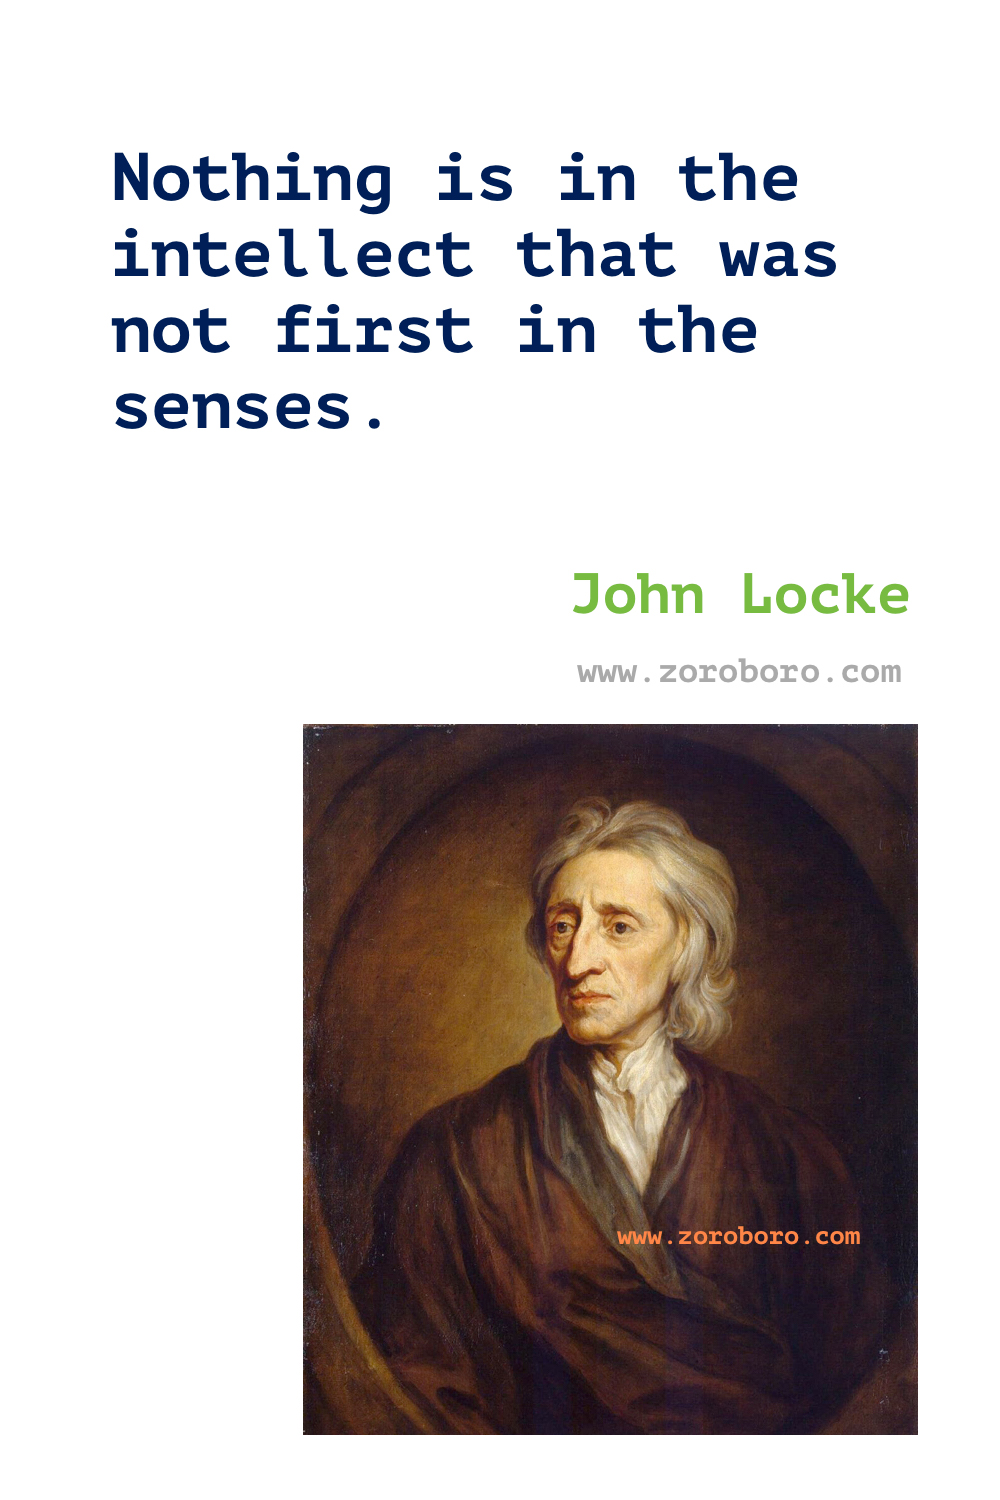 John Locke Quotes. John Locke two treatises of government Quotes. John Locke Philosophy. John Locke Books Quotes